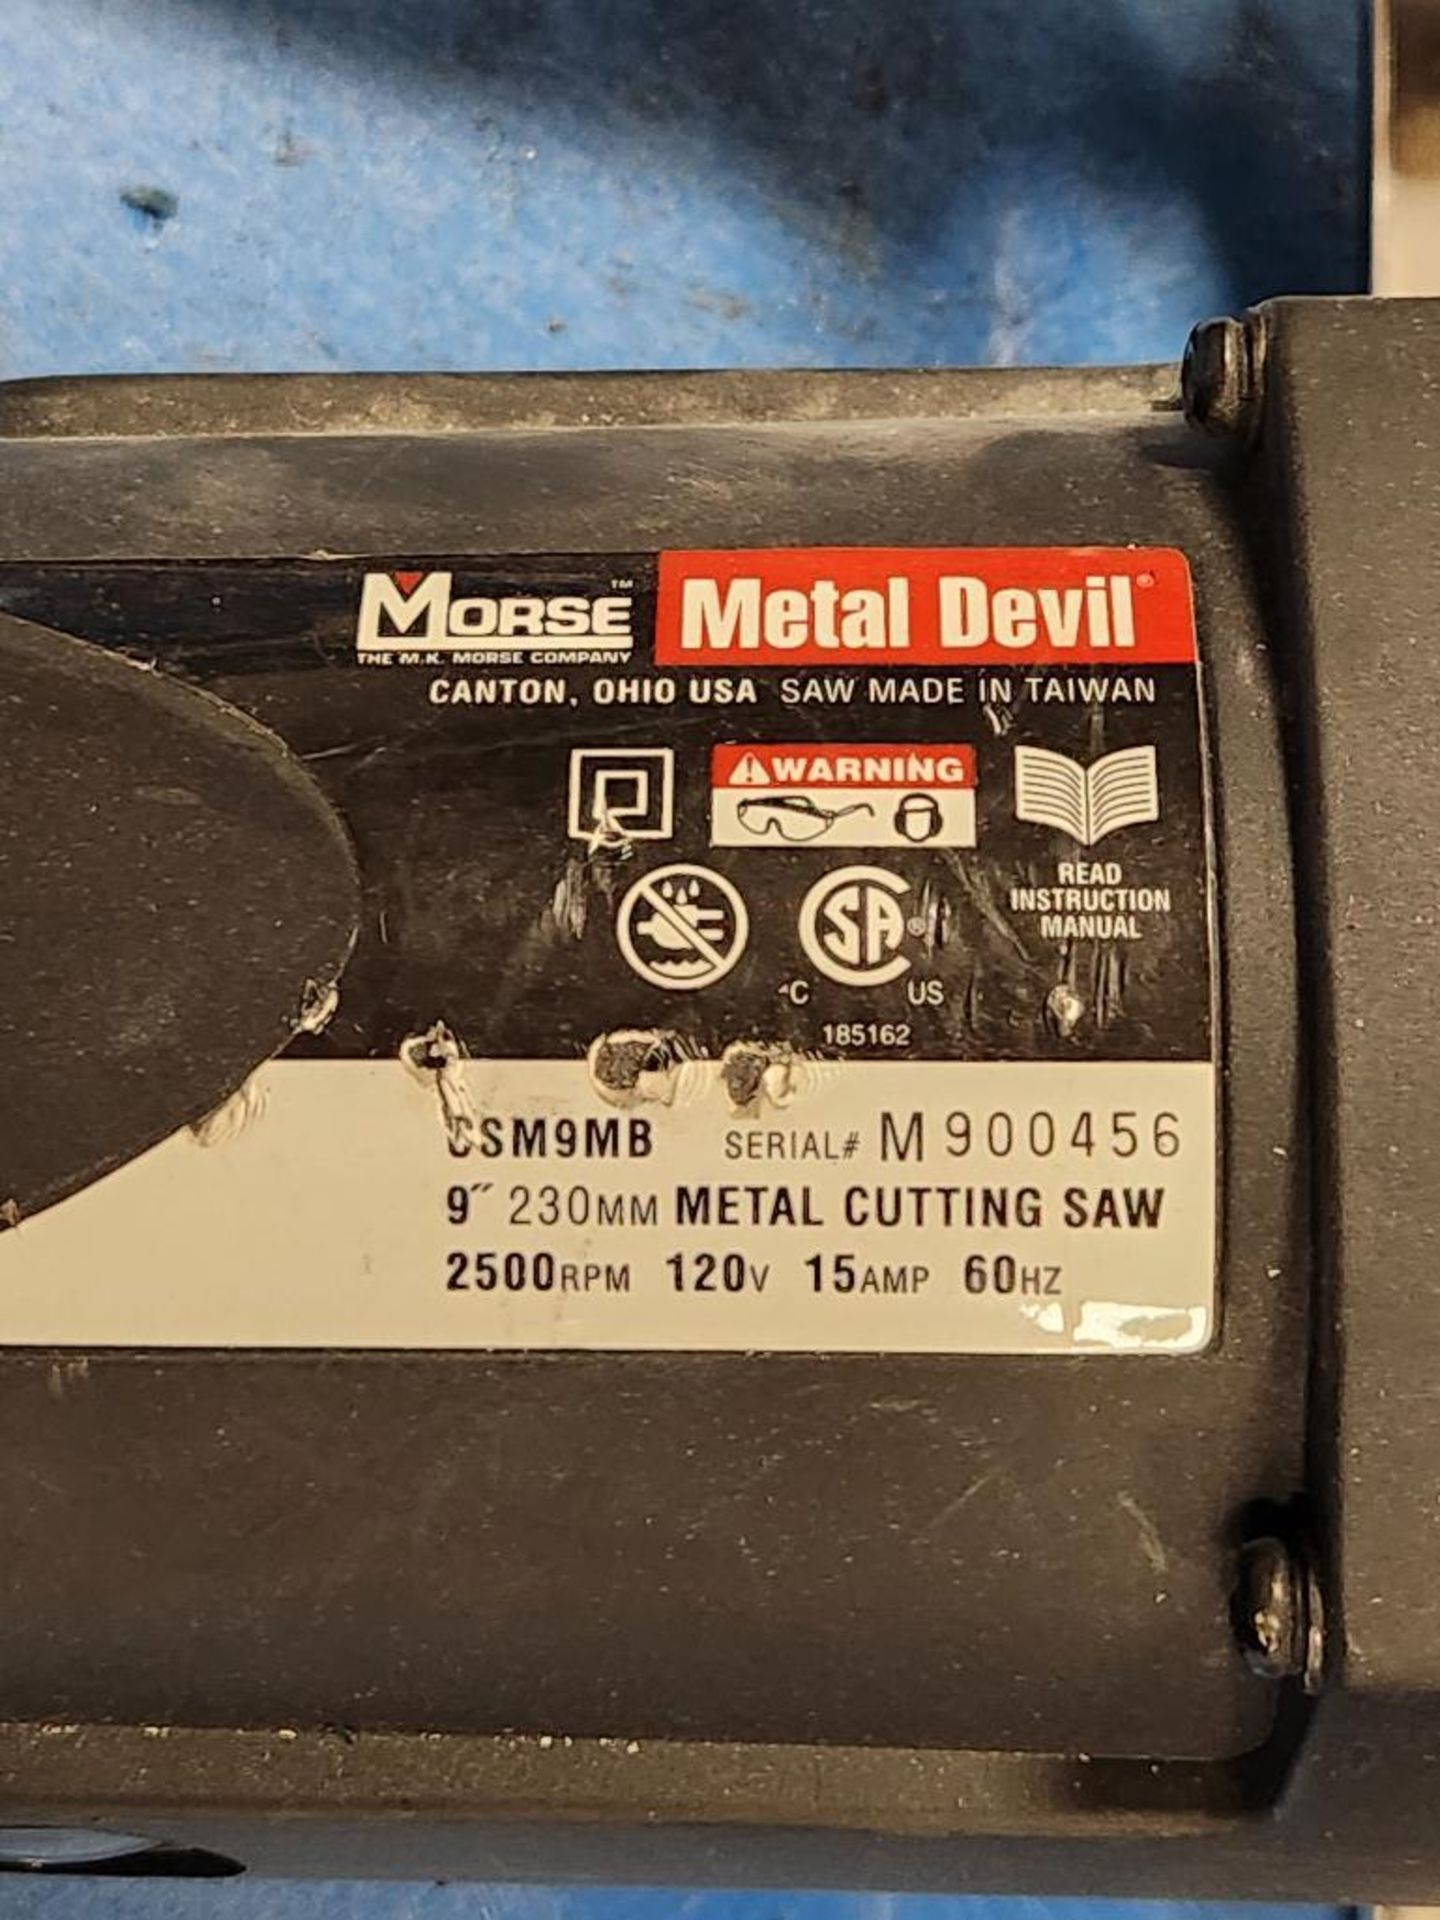 Morse Metal Devil 9" TCT Metal Cutting Circular Saw, Model CSM9MB, S/N M900456 - Image 4 of 6